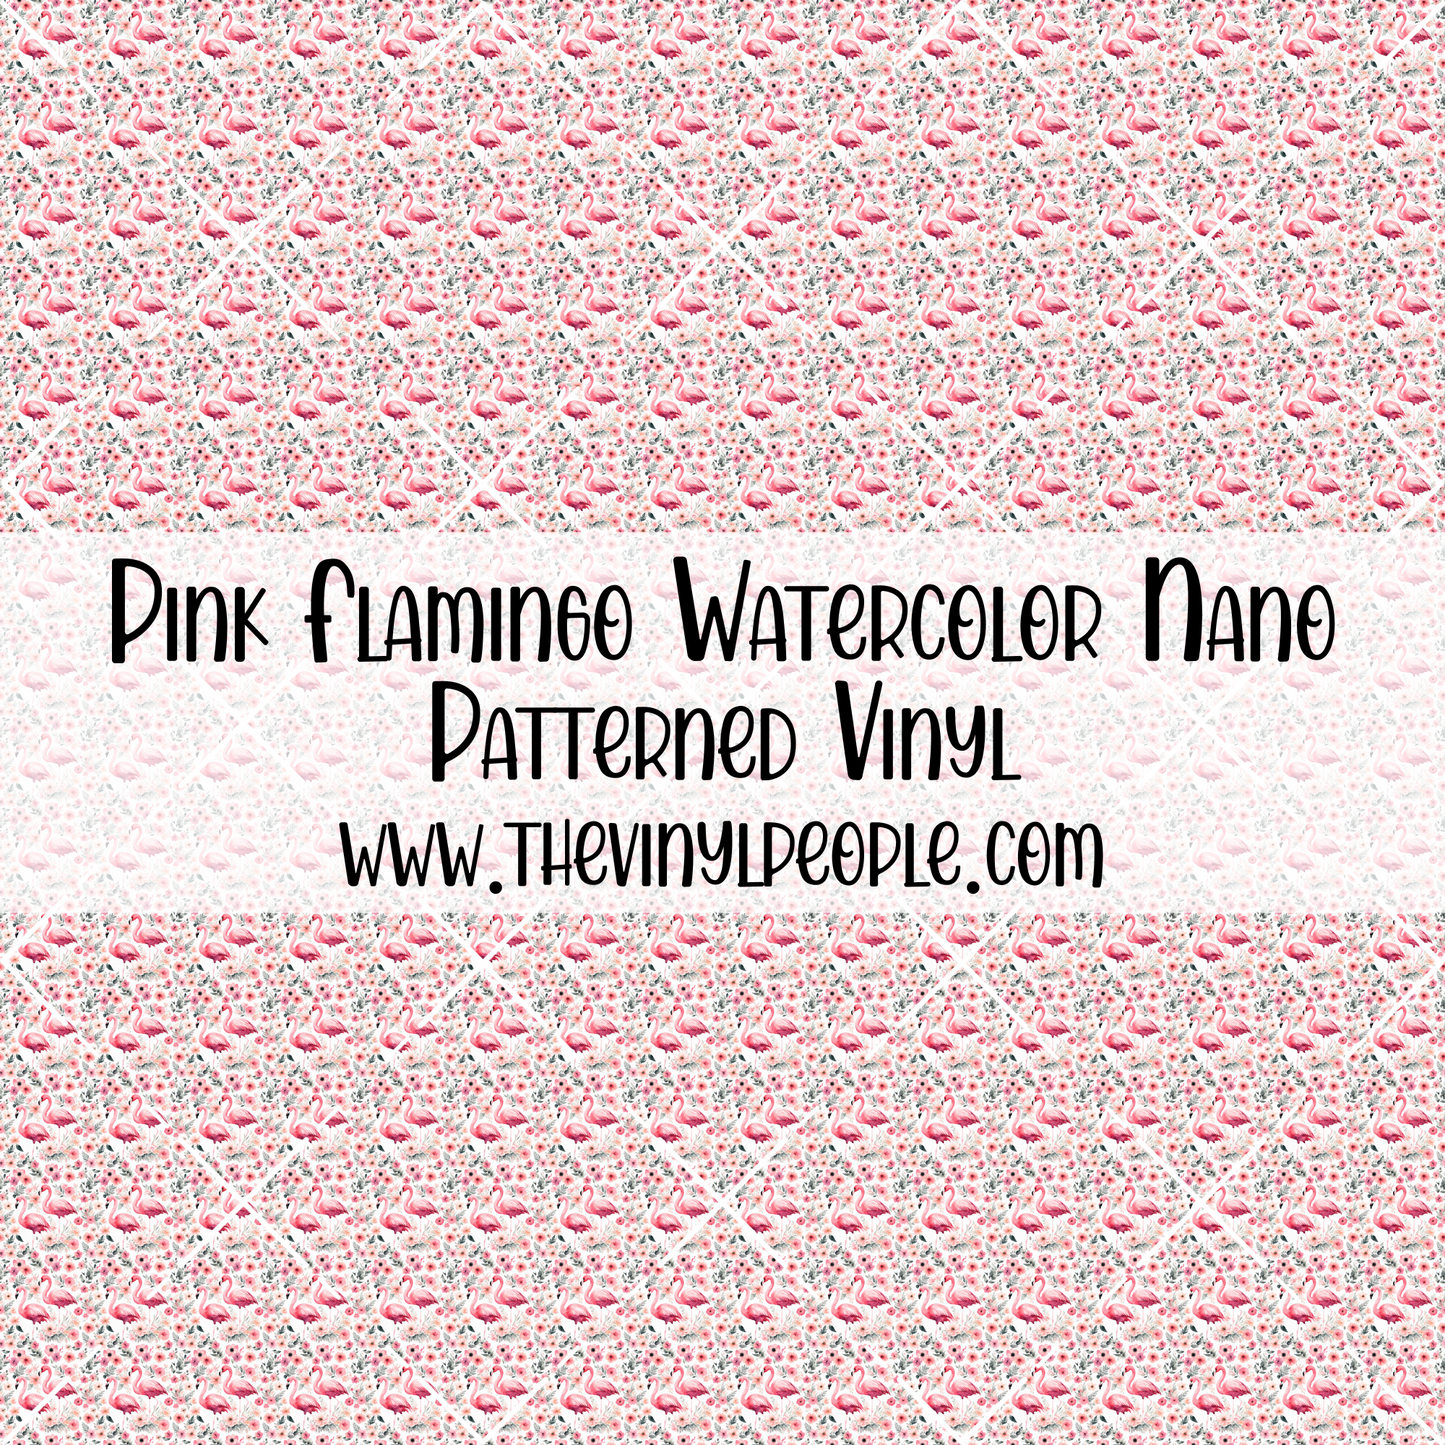 Pink Flamingo Watercolor Patterned Vinyl